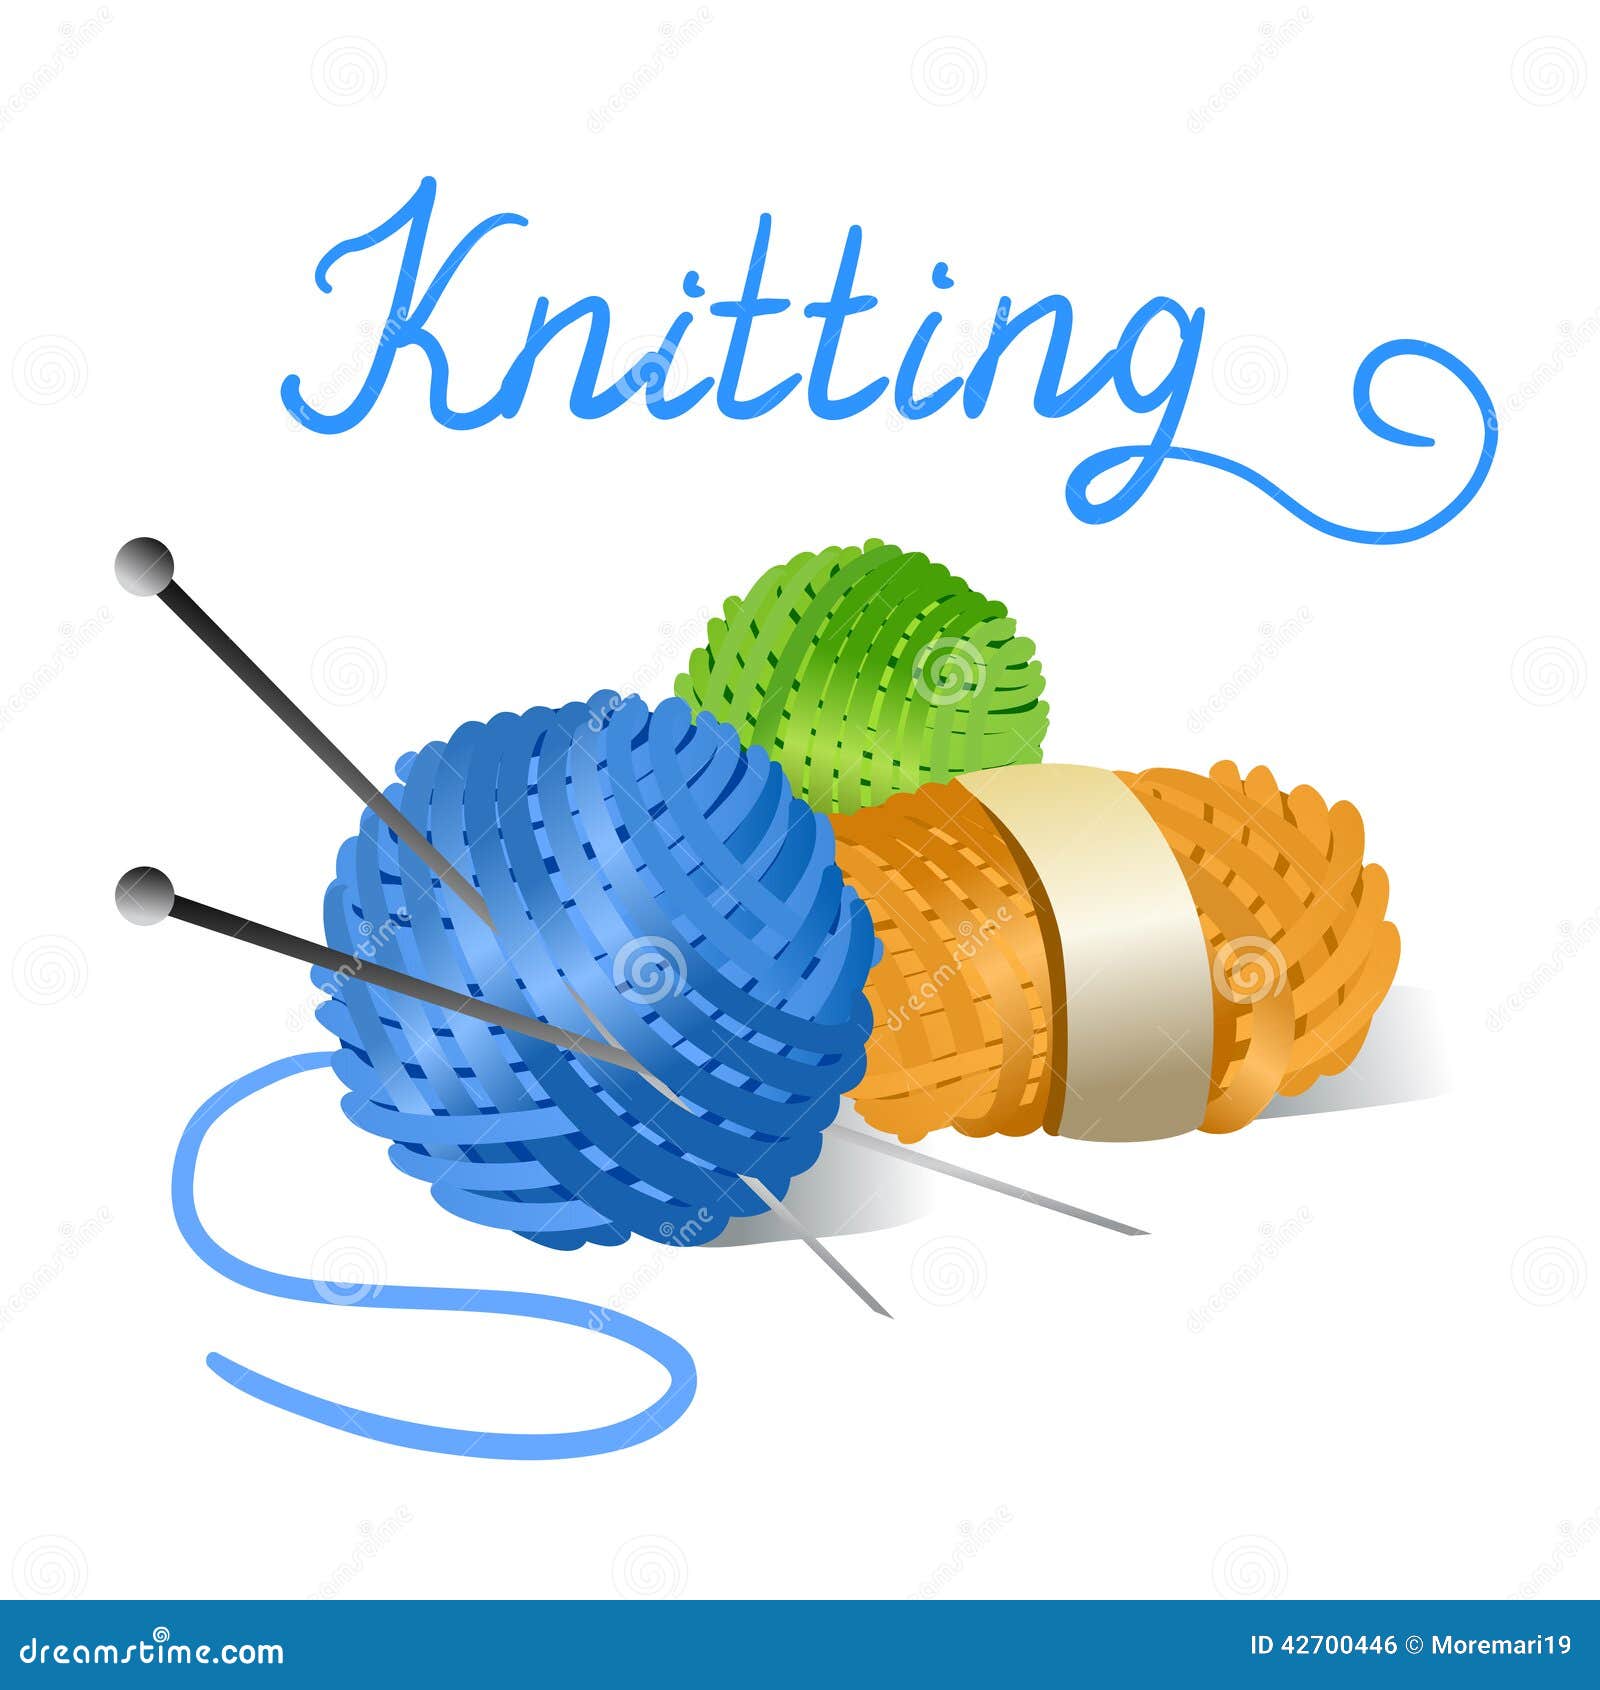 clip art yarn and knitting needles - photo #33